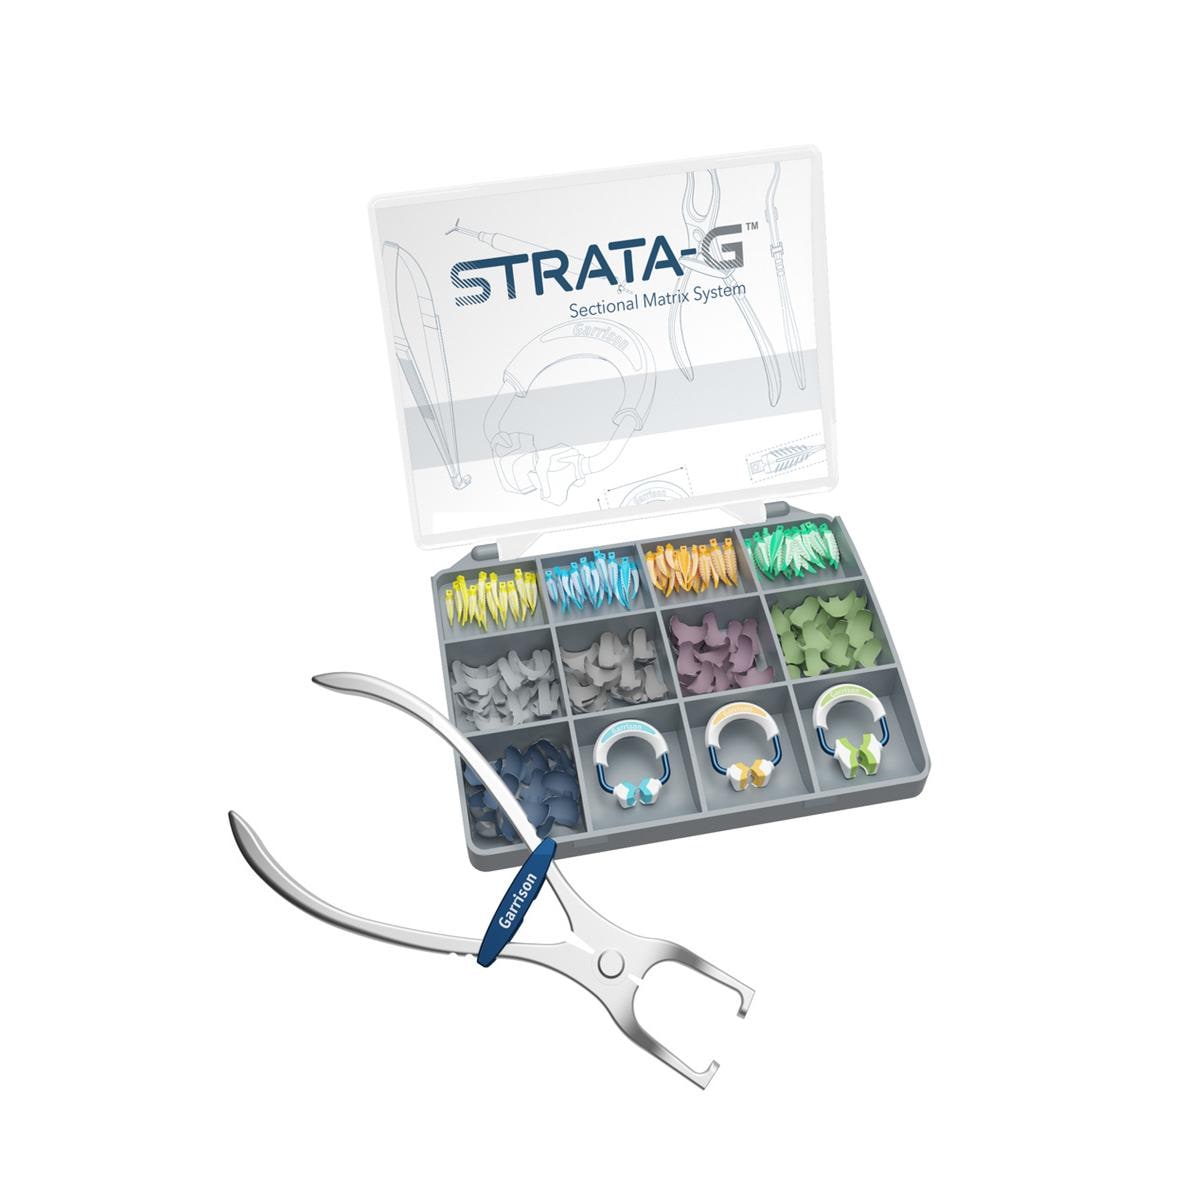 Systme de matrice sectionnelle Strata-G - Kit d'introduction (SG-KS-00)